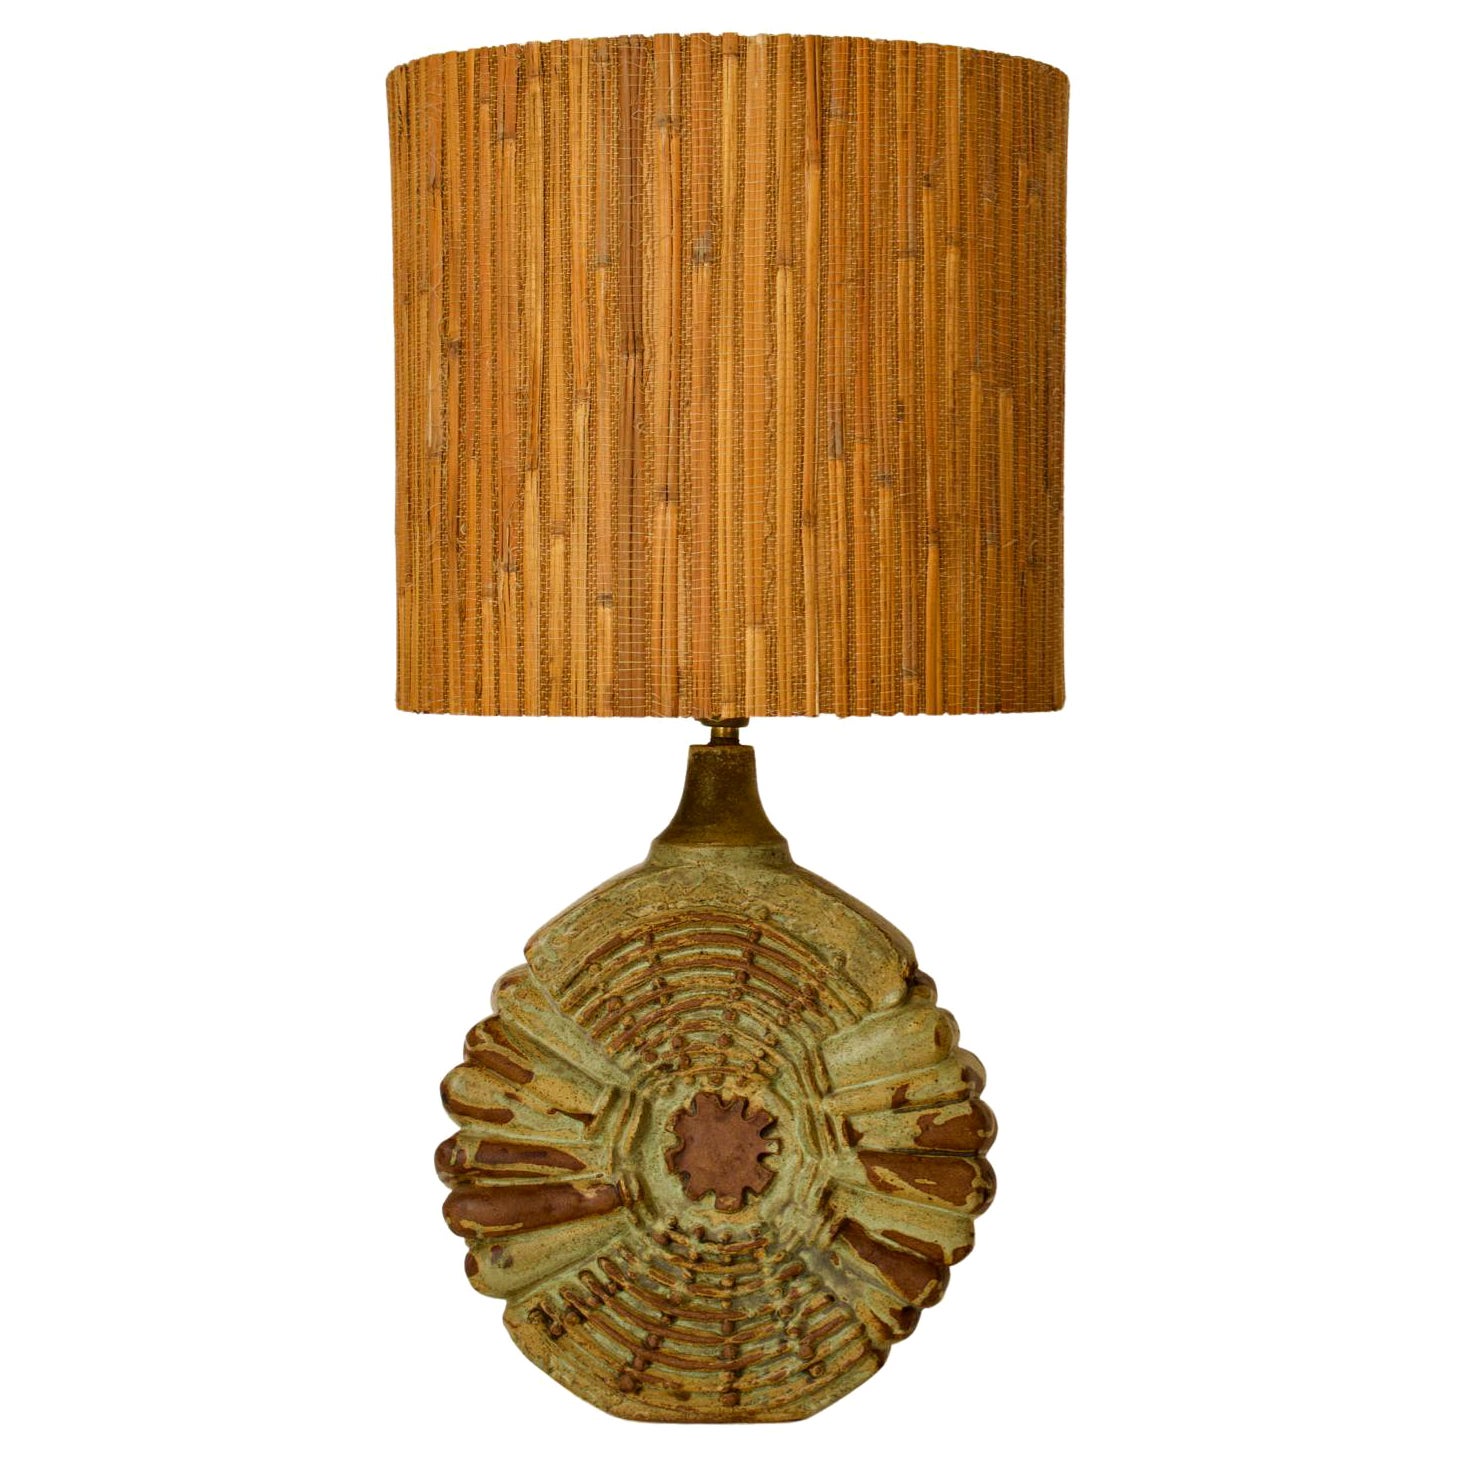 Ceramic Table Lamp with Original Shade by Bernard Rooke, England